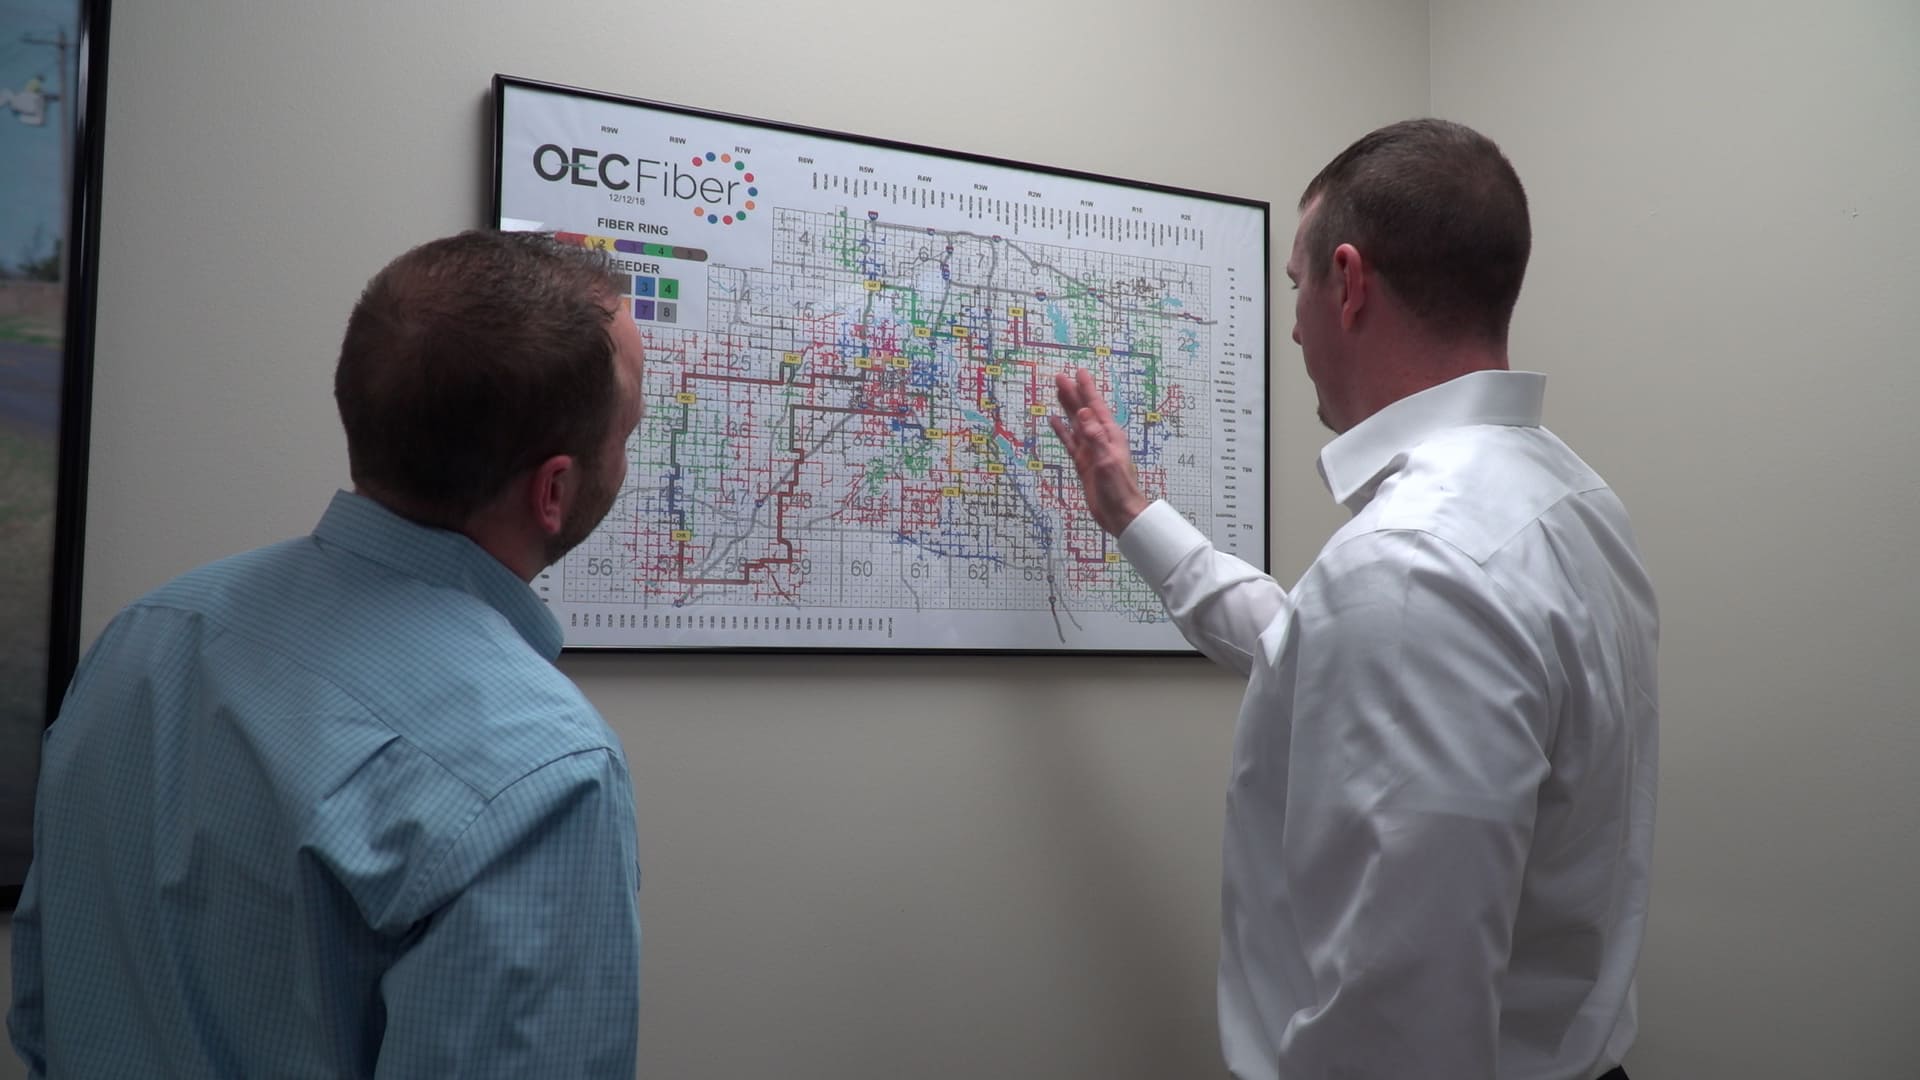 A map on a wall depicting OEC Fiber's service area.